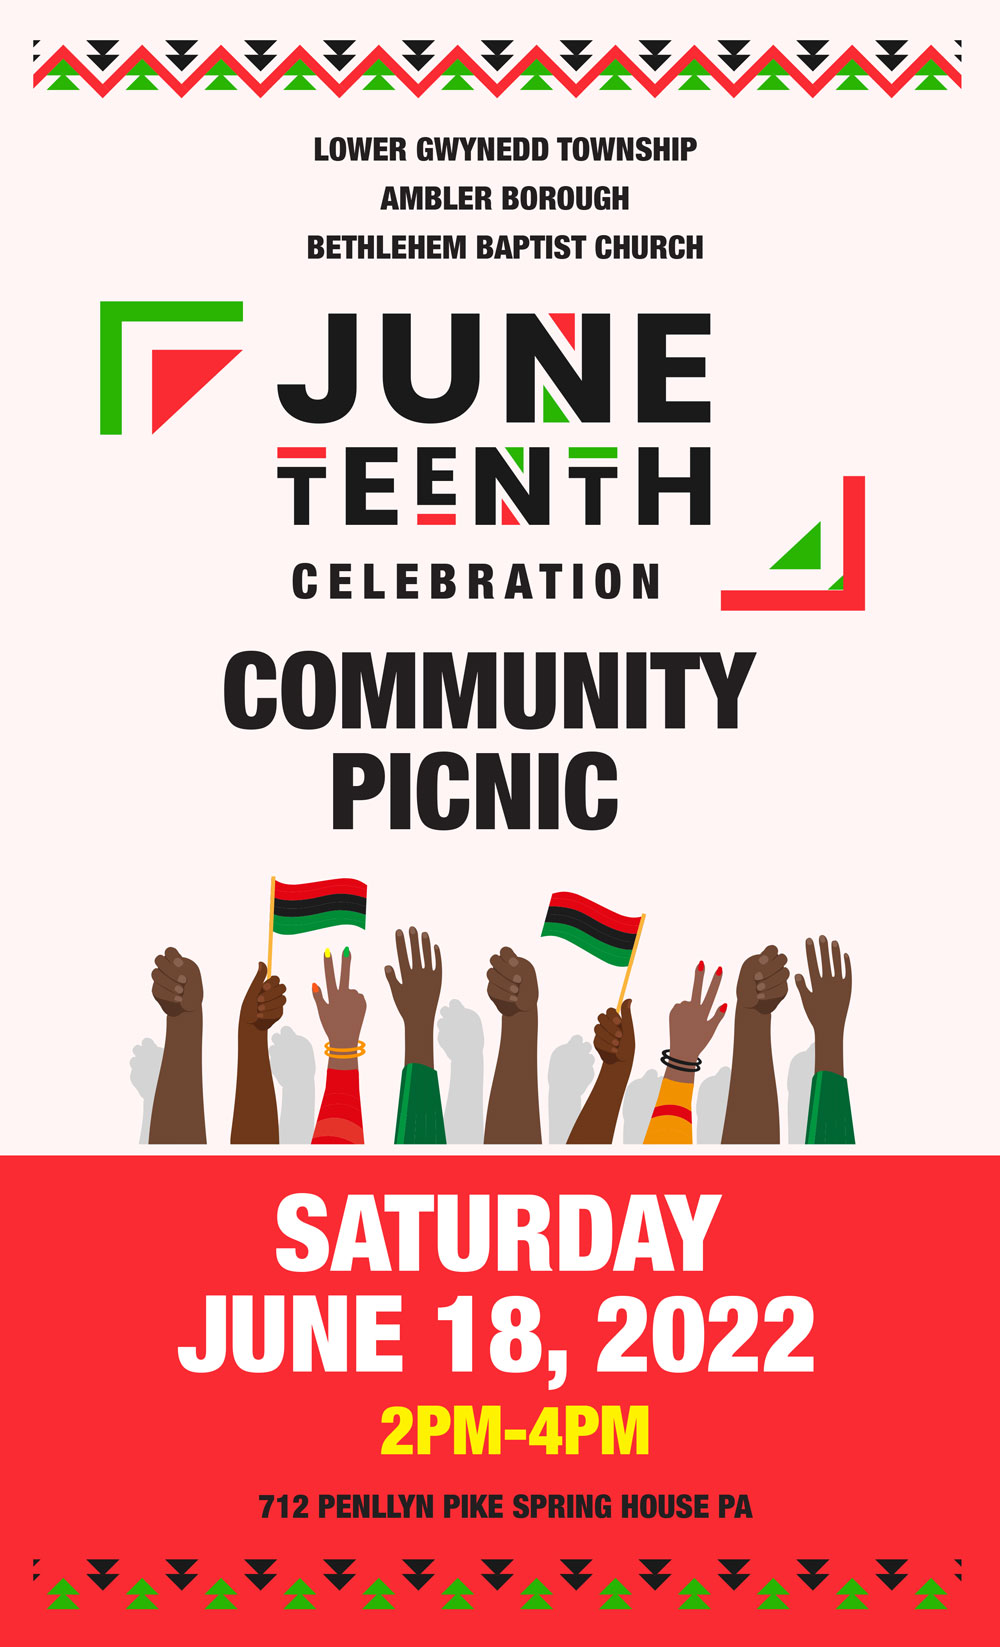 Juneteenth Celebration Community Picnic, Saturday, June 18, 2022, 2-4 PM